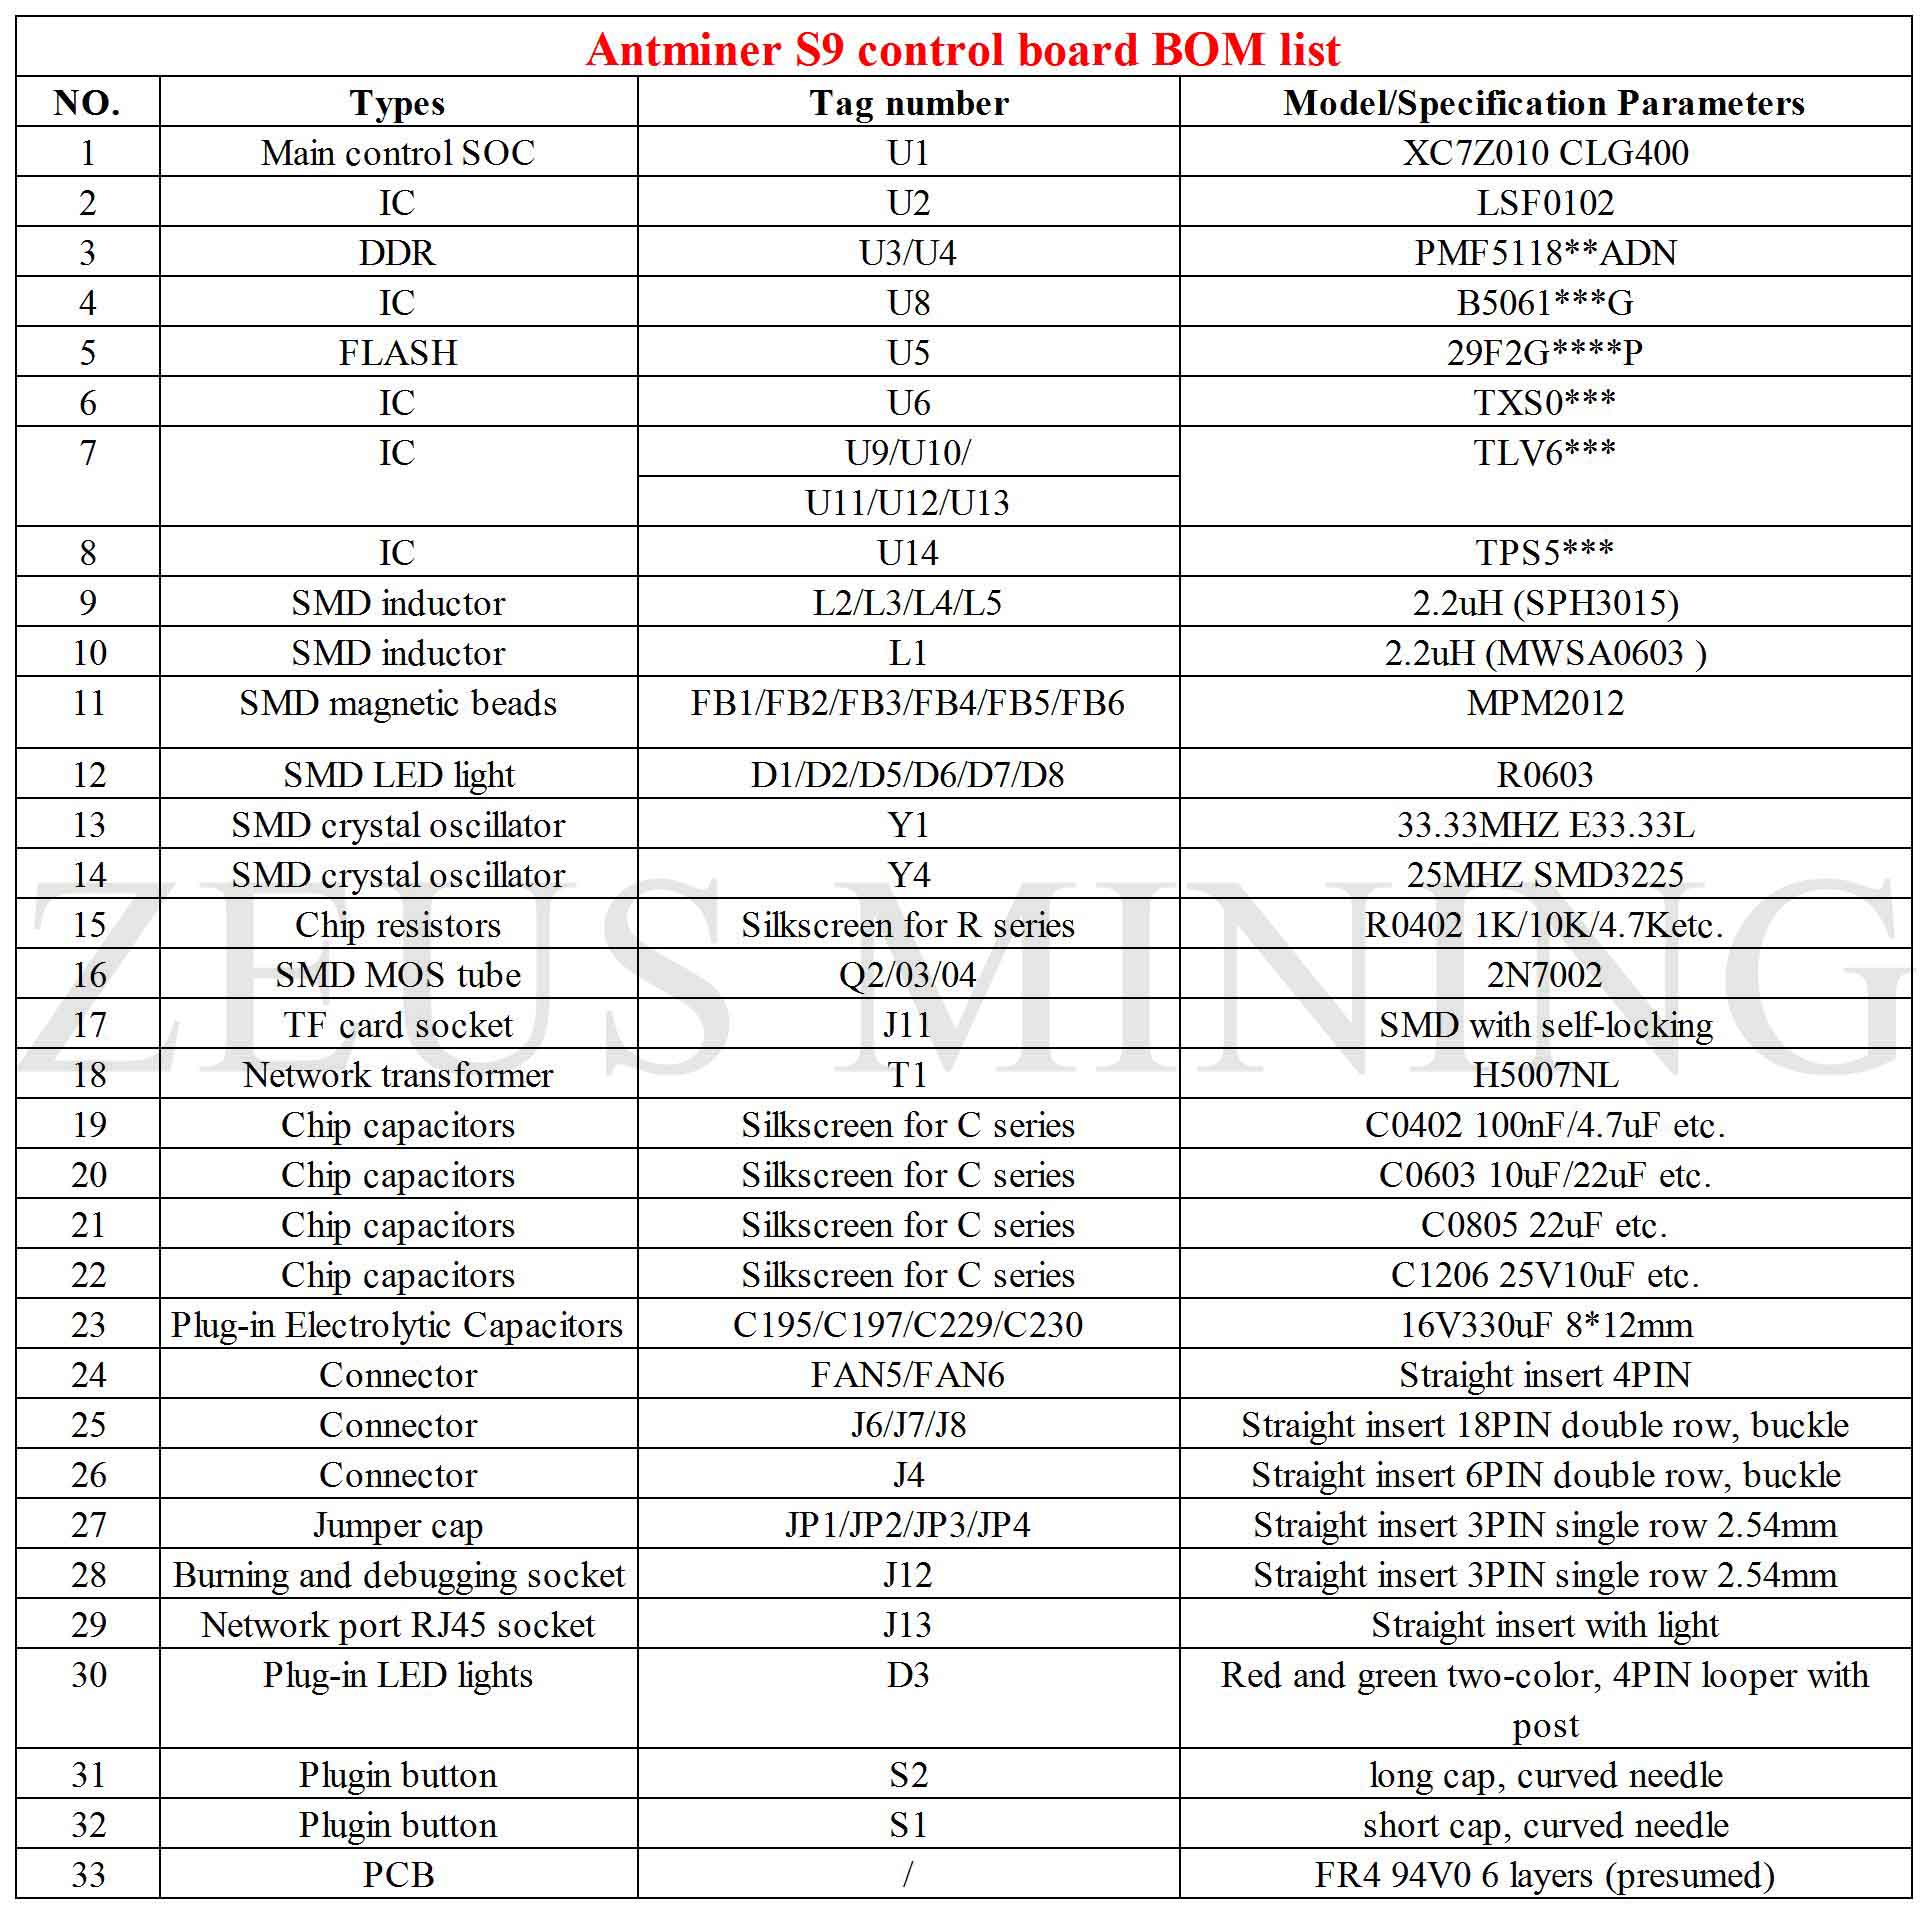 Antminer S9 control board BOM list